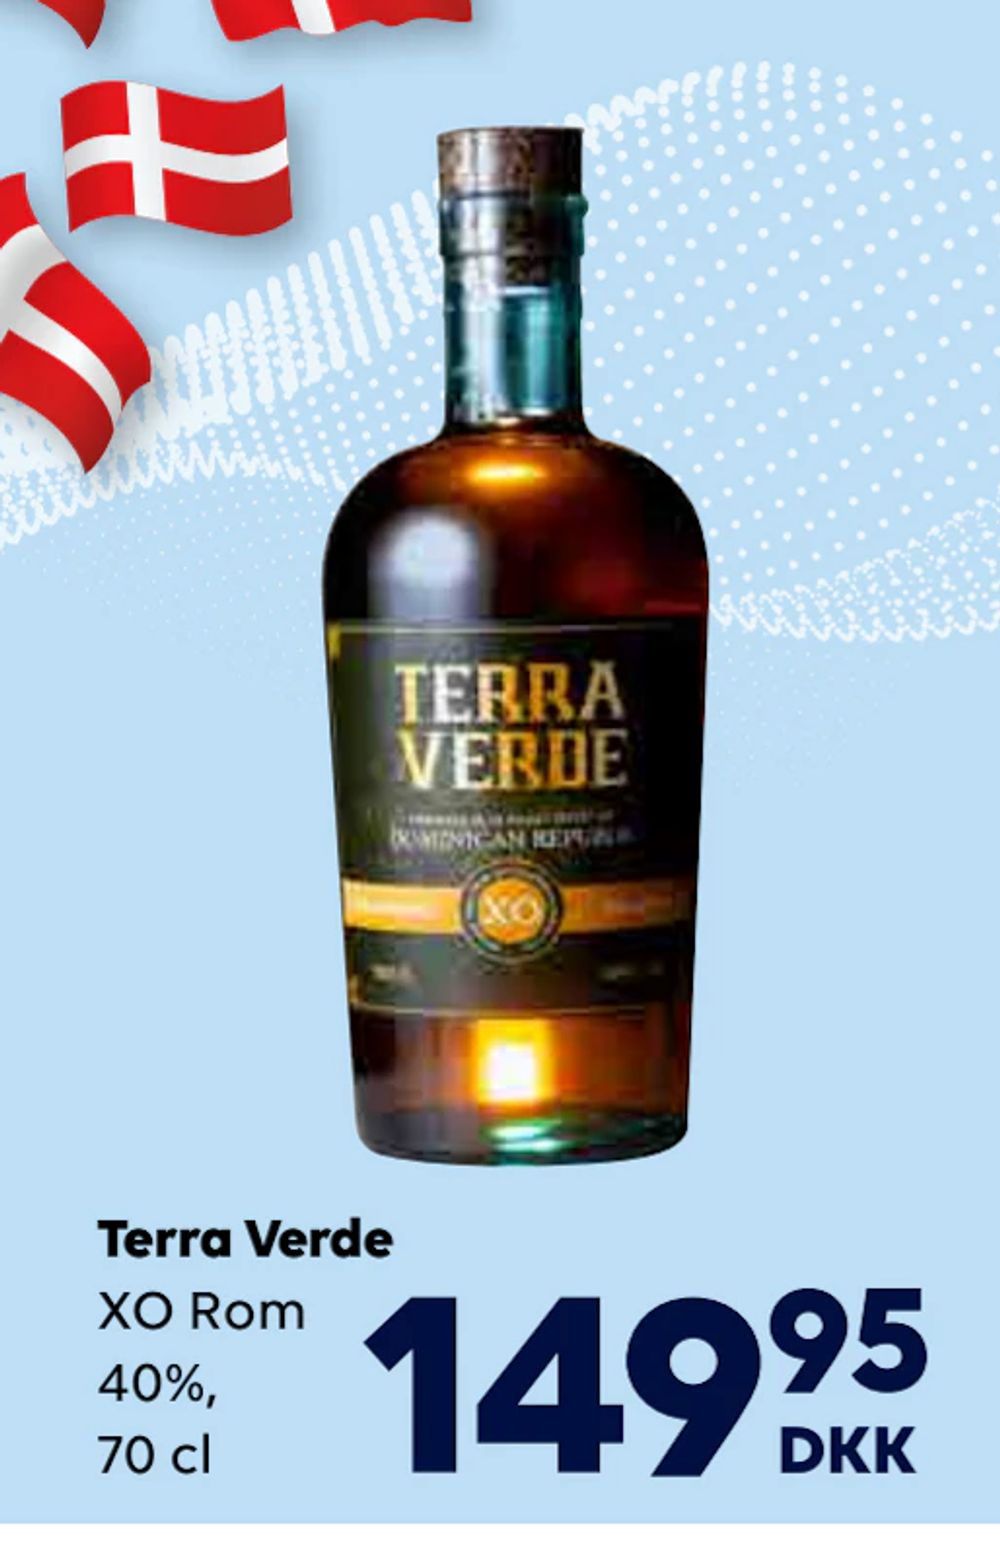 Tilbud på Terra Verde fra BorderShop til 149,95 kr.